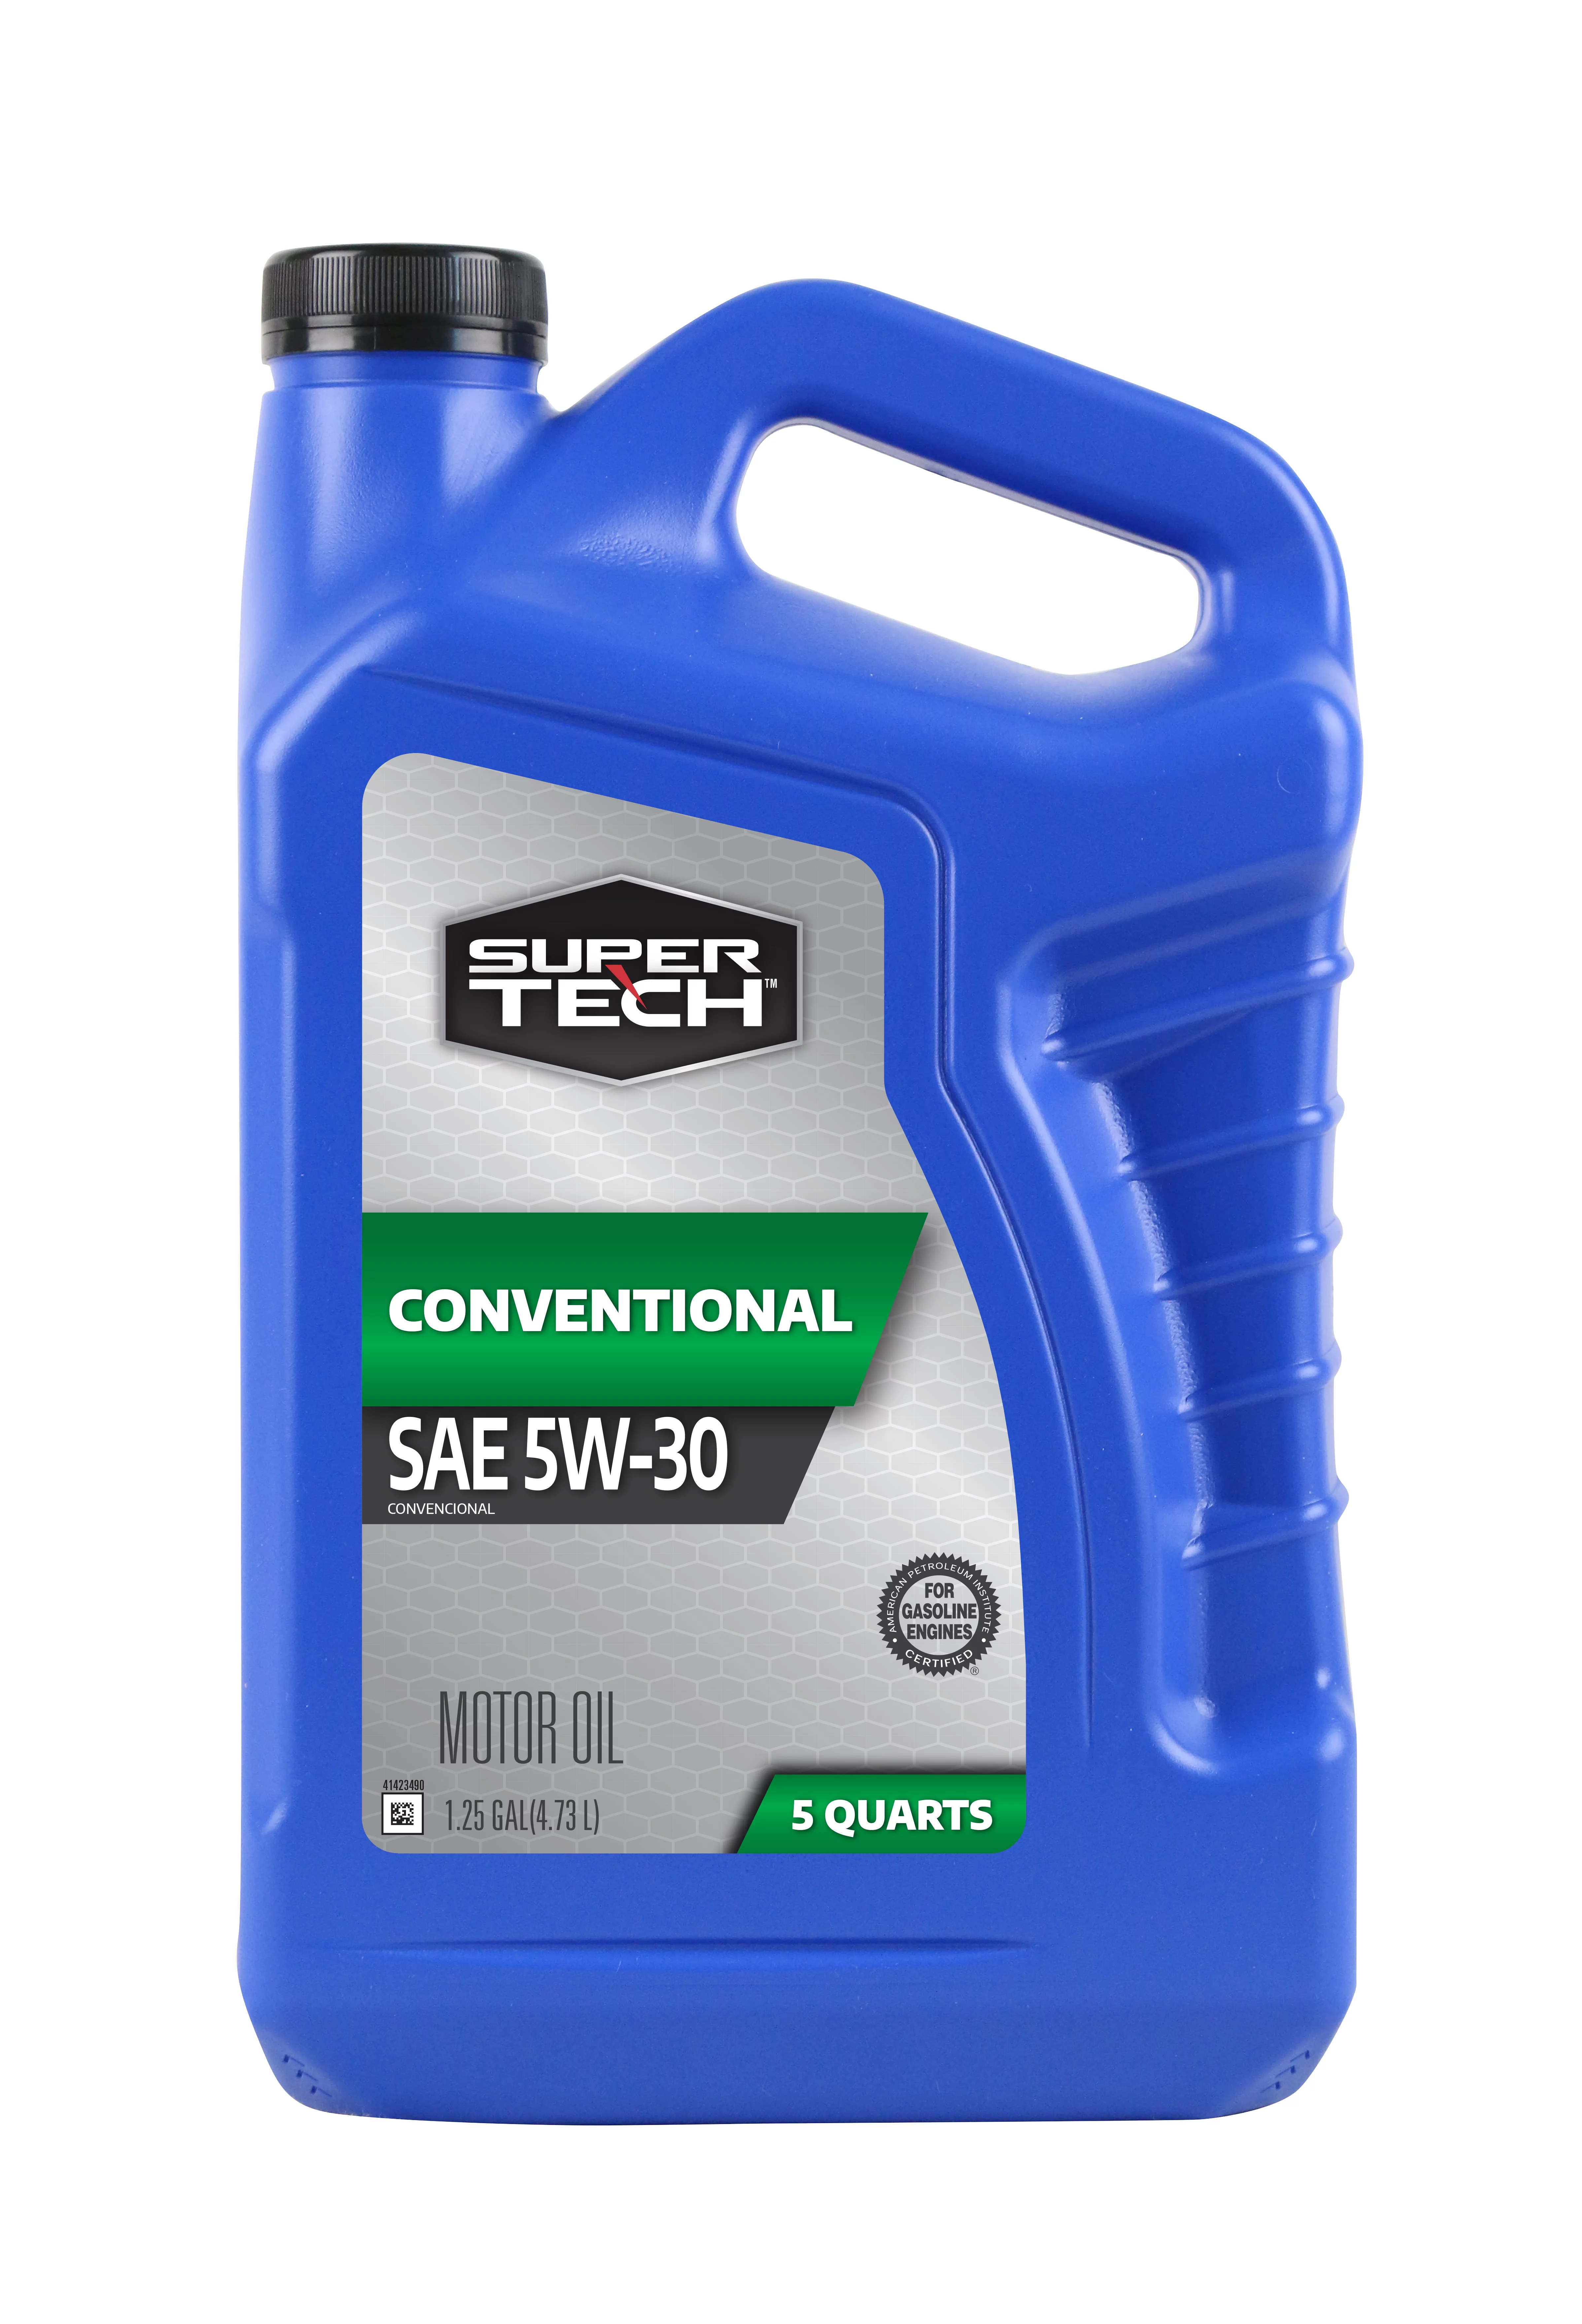 Super Tech Conventional SAE 5W-30 Motor Oil, 5 Quarts